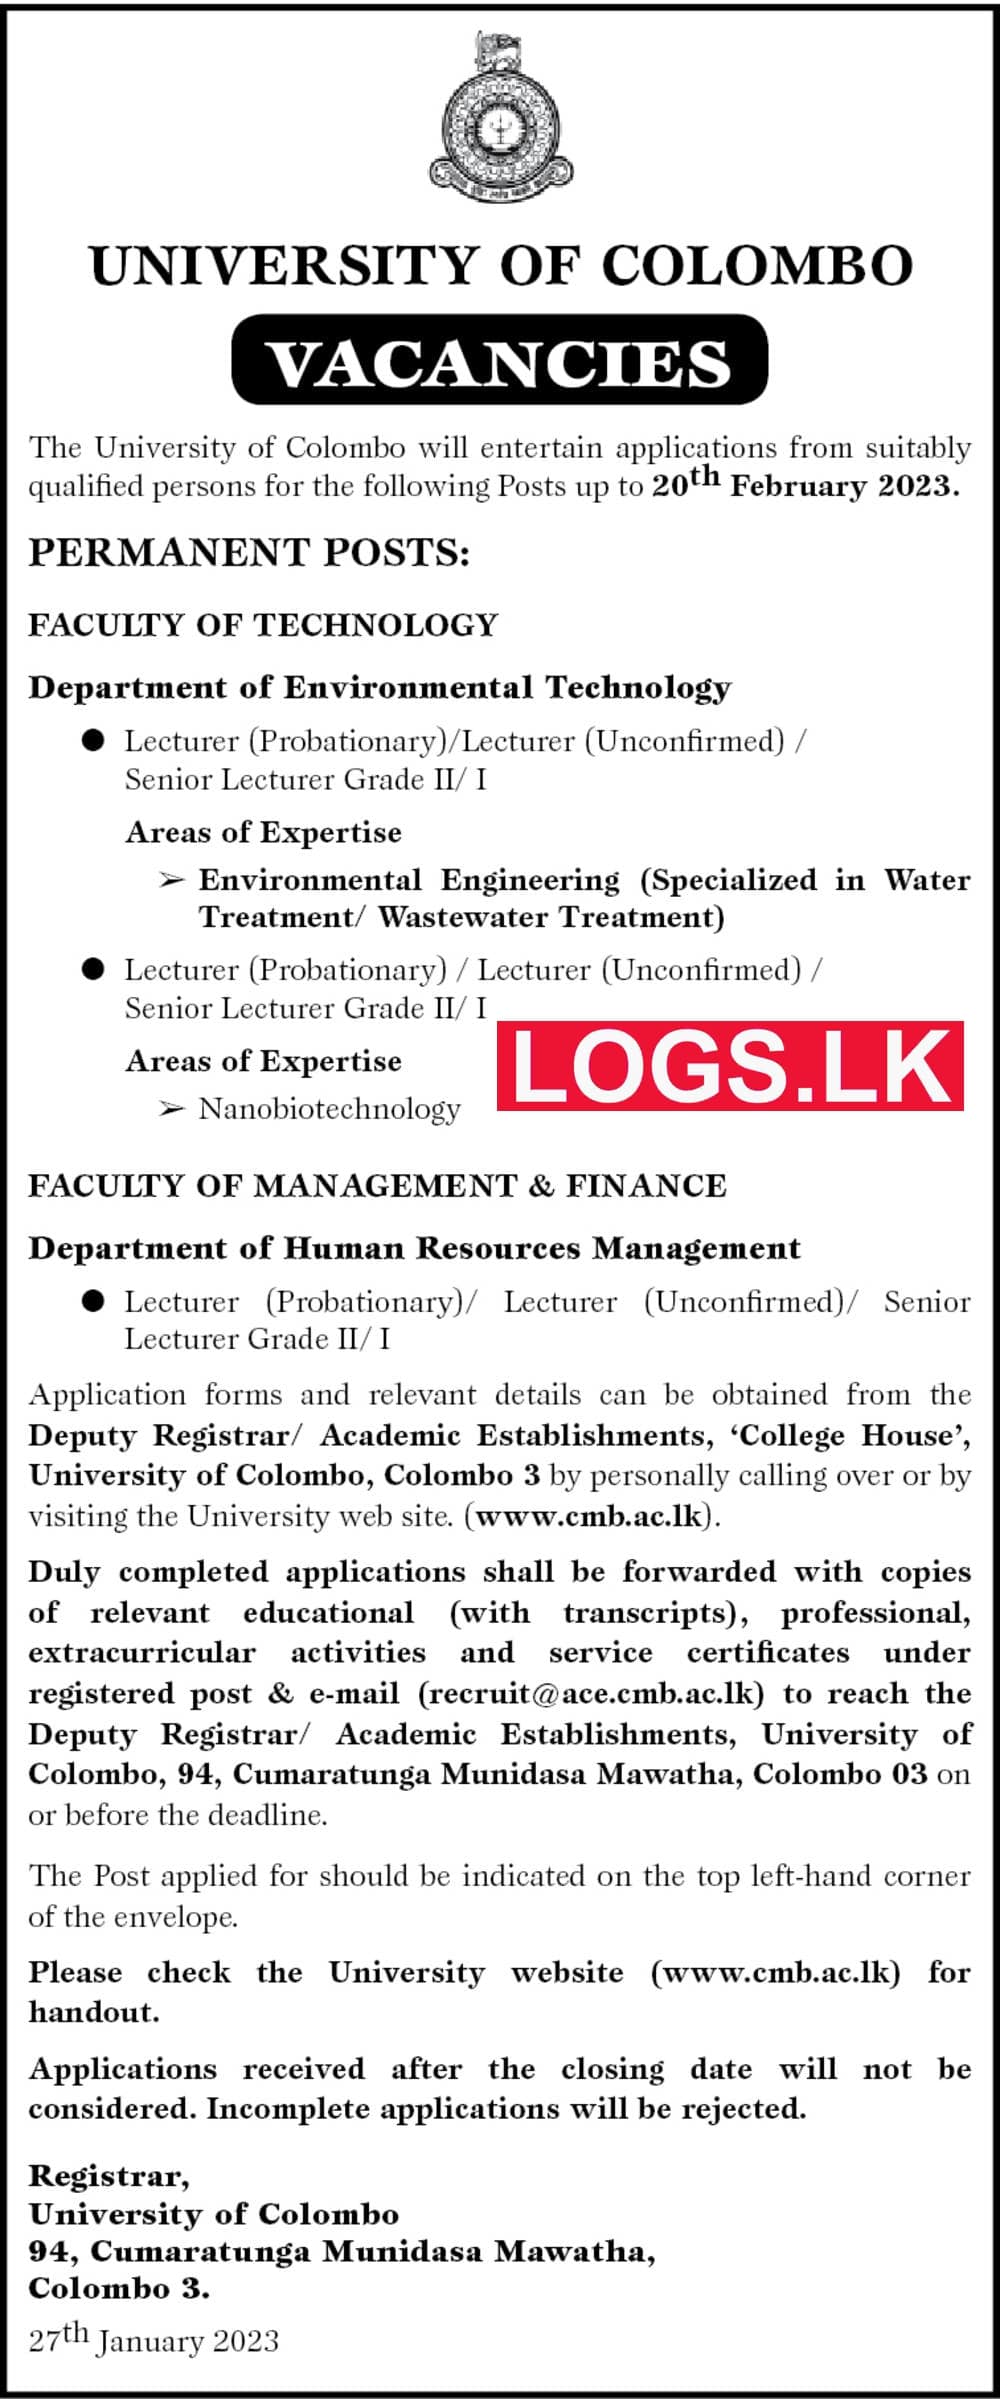 University of Colombo Permanent Job Vacancies 2023 Application Form, Details Download